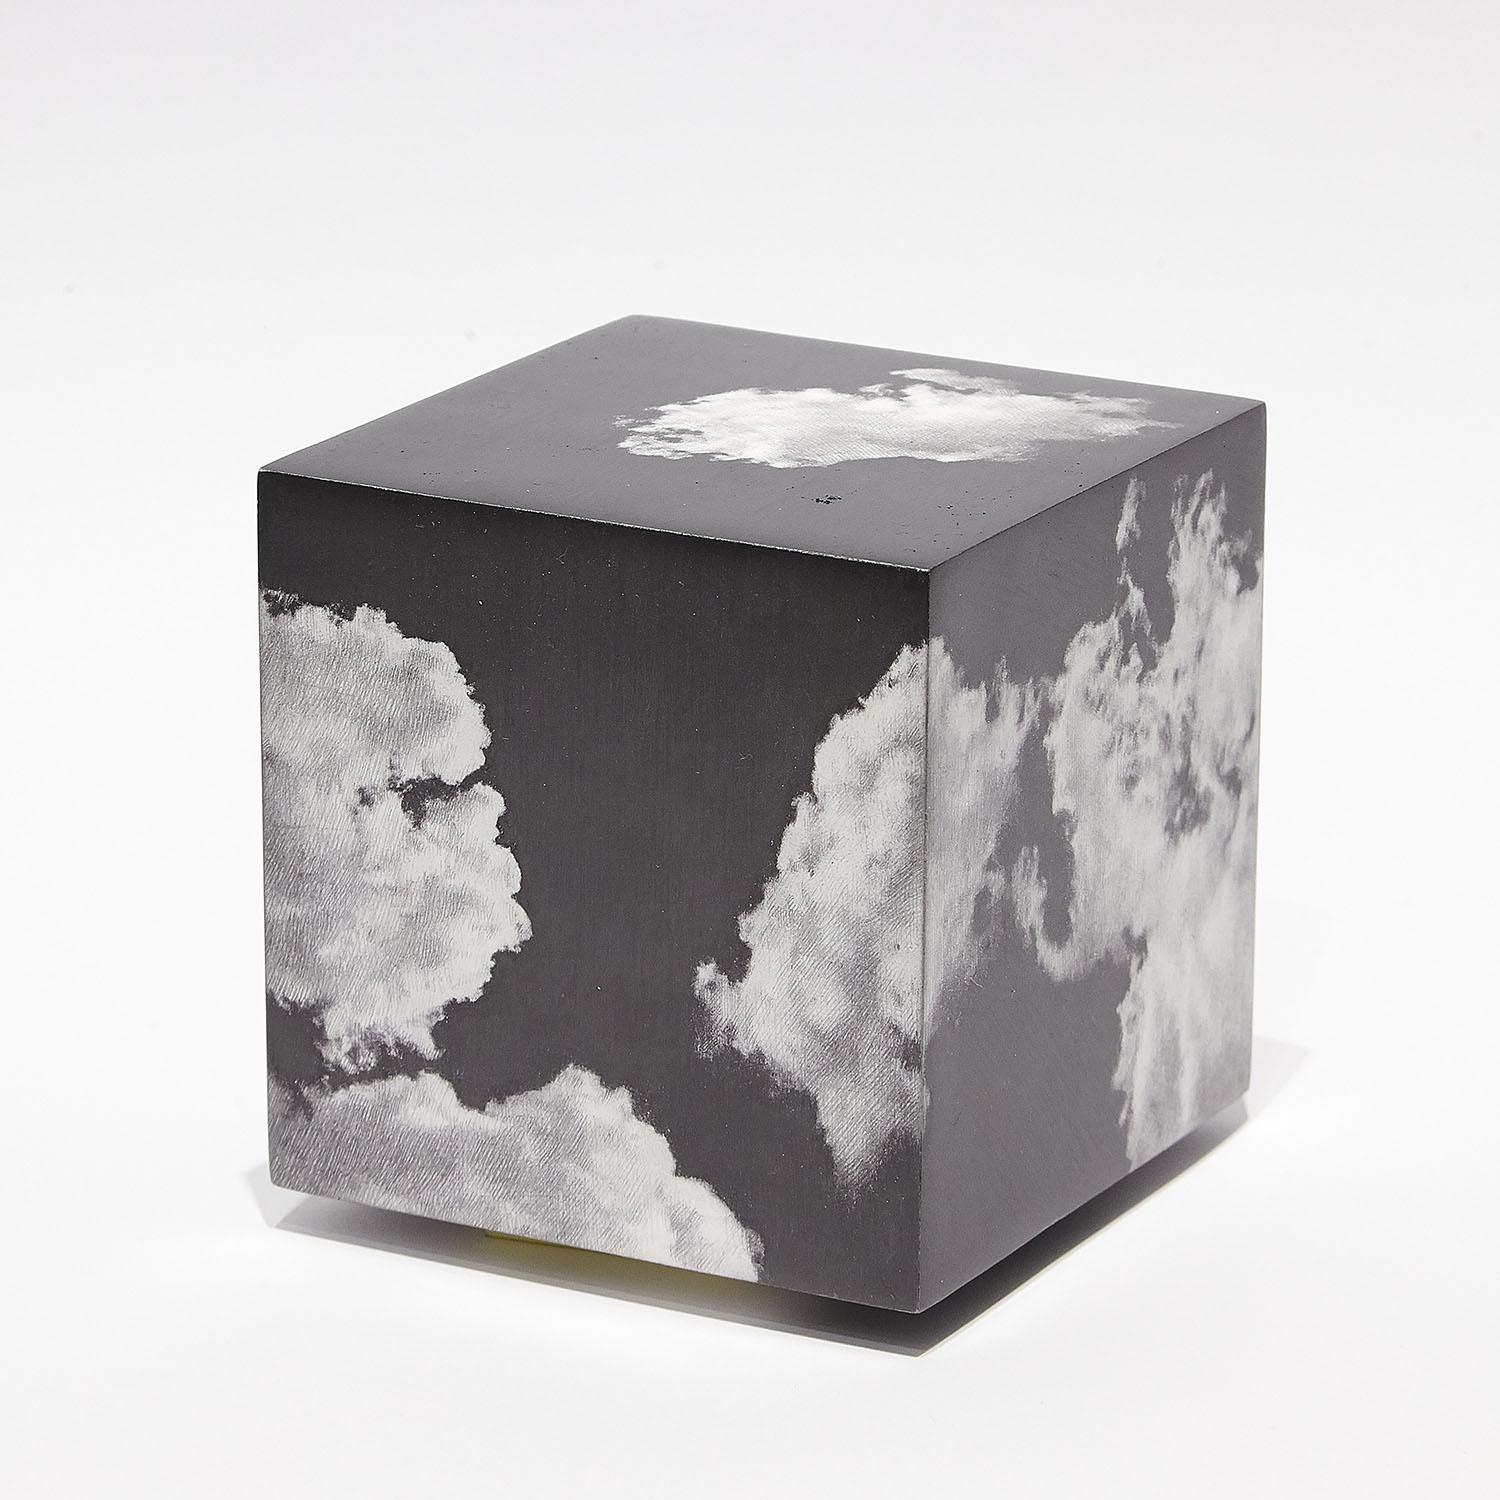 10 cm cubi di cielo - Sculpture by Elvio Chiricozzi